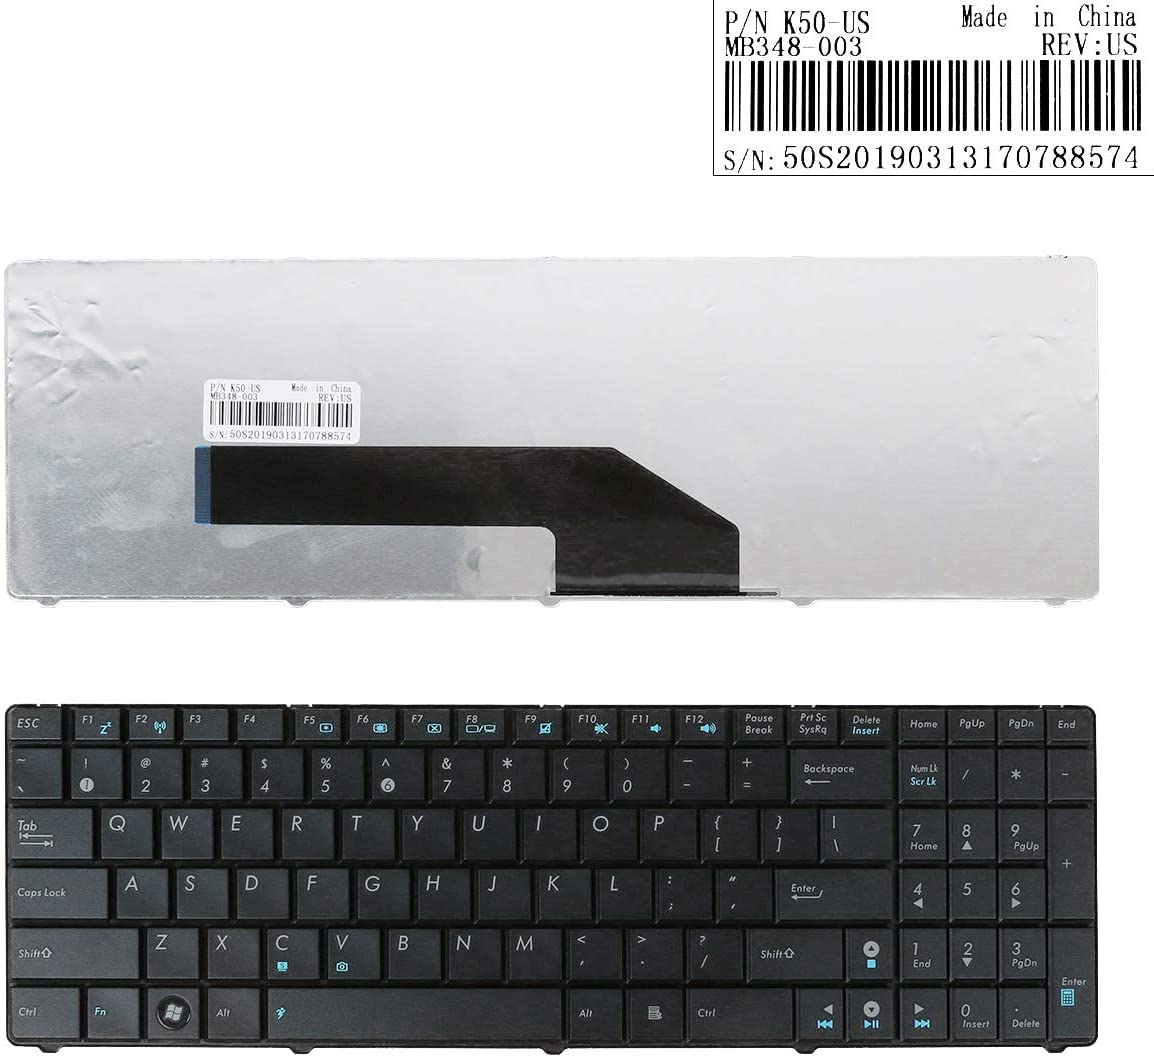 WISTAR Laptop Keyboard Compatible for ASUS K50 X5DI K50AB K70 X5IC X5DC X66IC K50IN K70IN K50IE K50E K51 K60 K50X K50A K50AB K50IJ K50ID K50IN K61 K71 K3333333X66IC US Layout Black Color